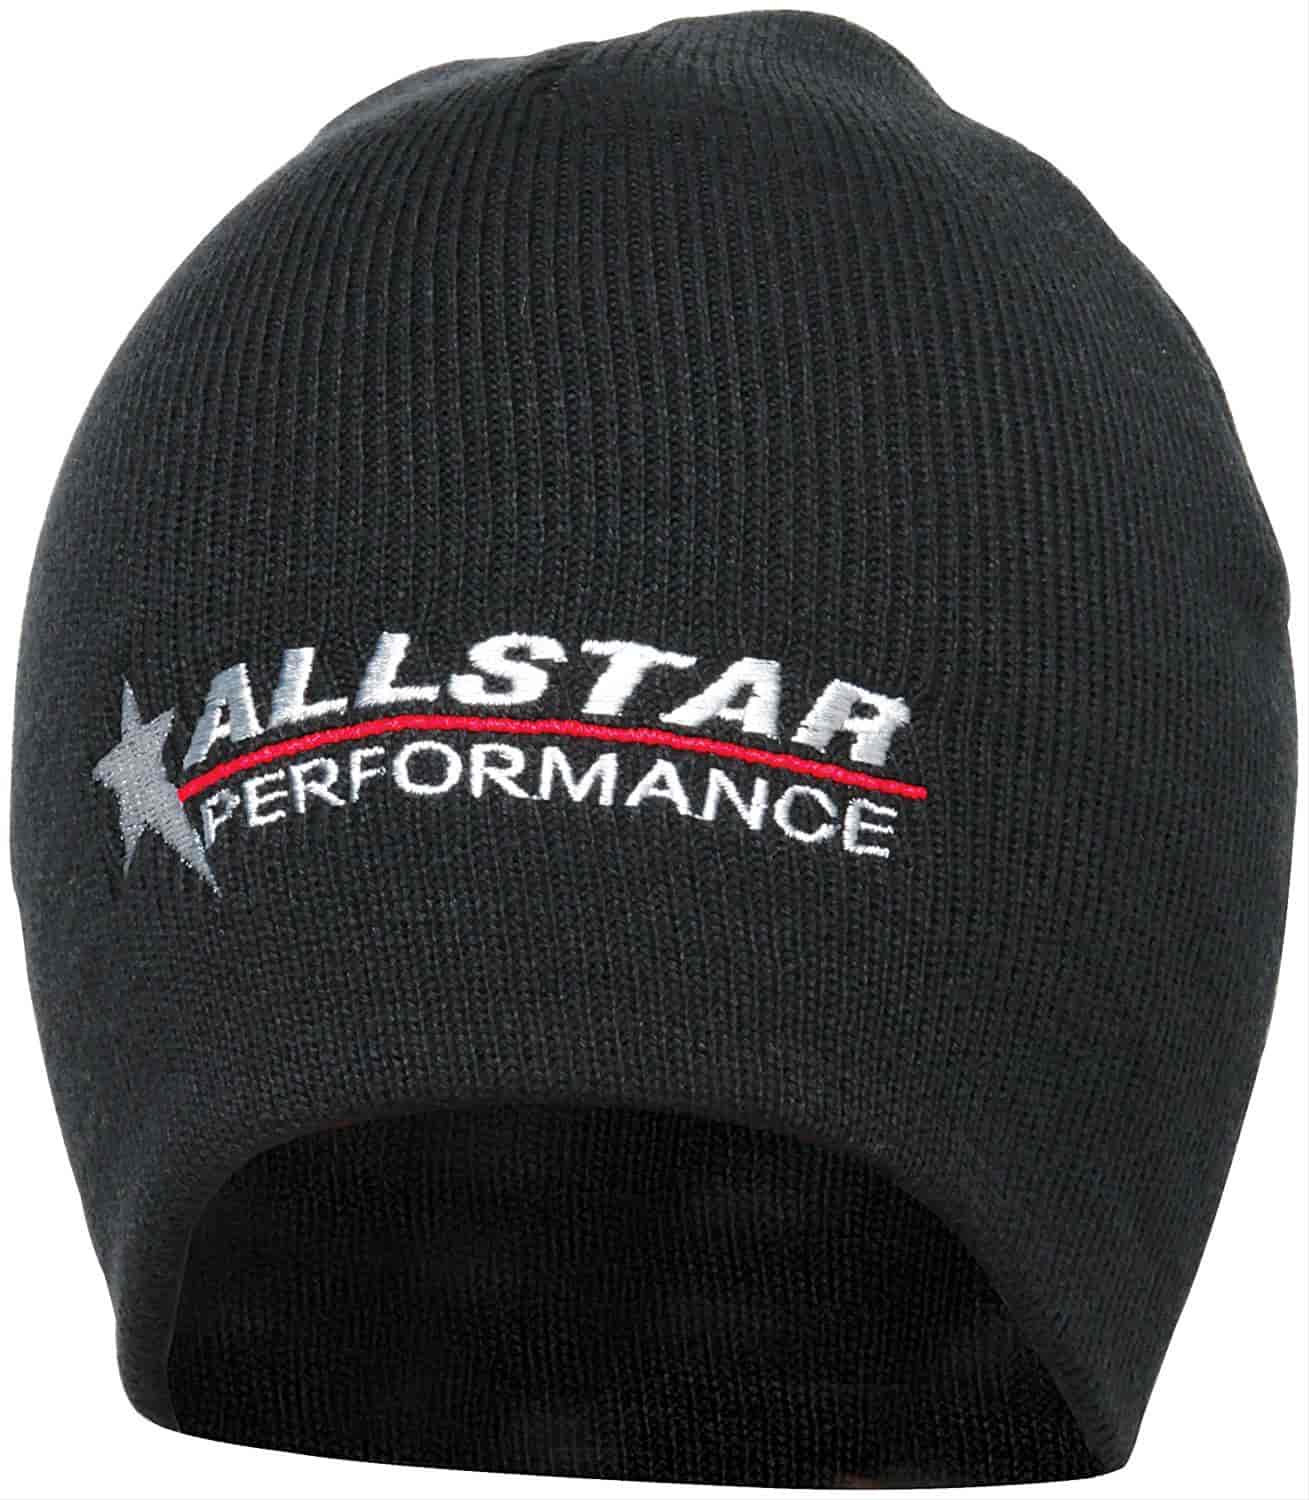 Allstar Performance Beanie